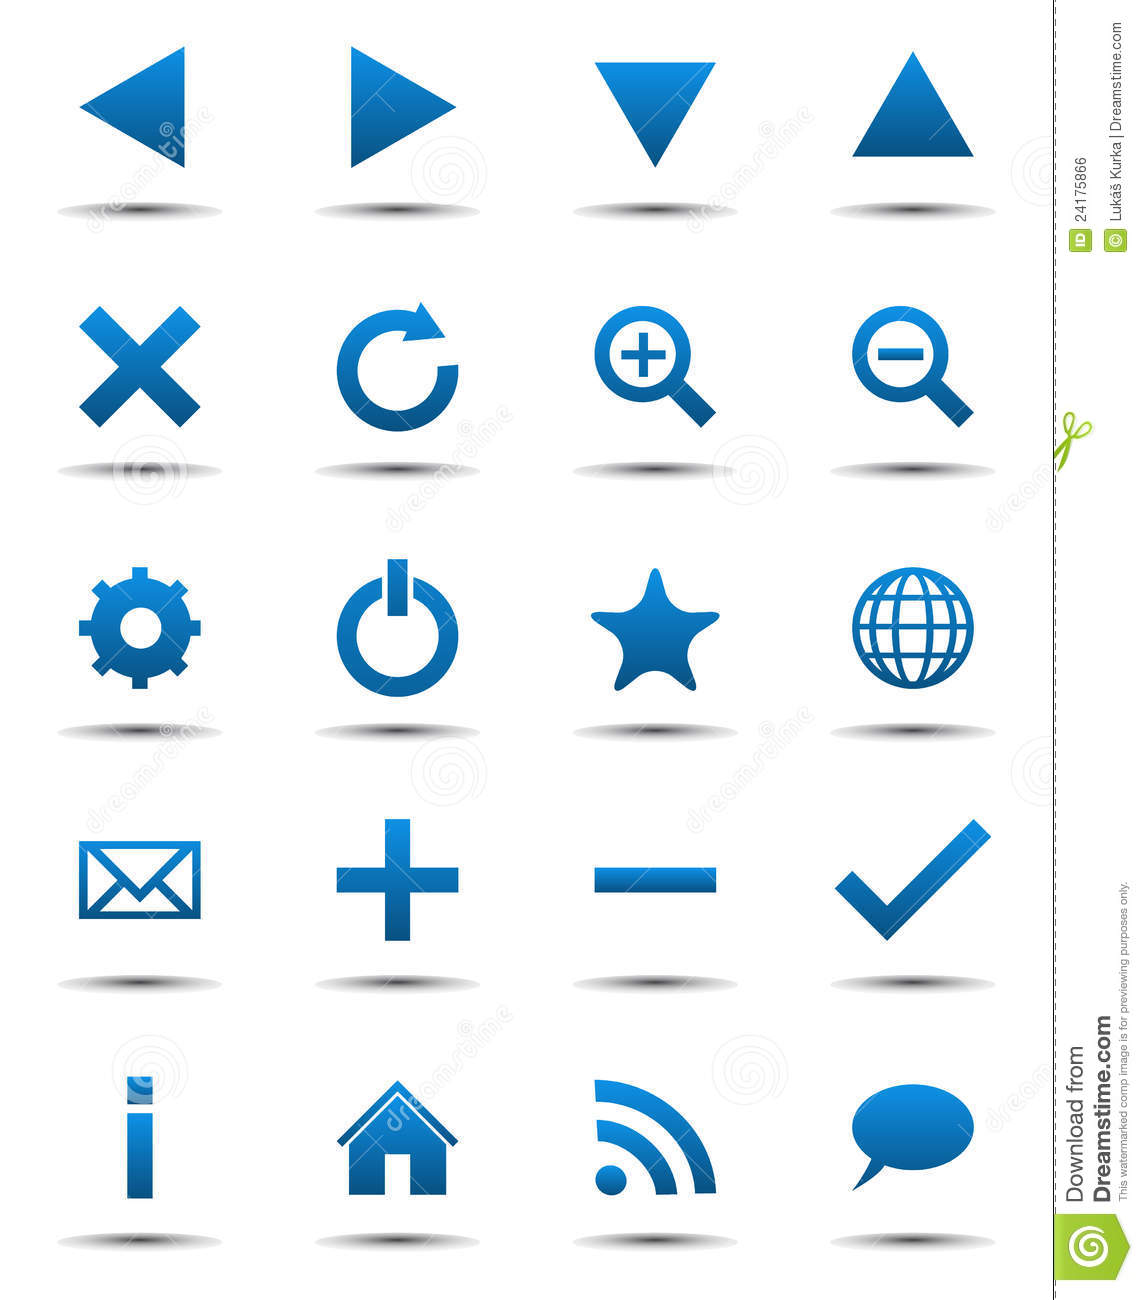 Free Website Navigation Icons